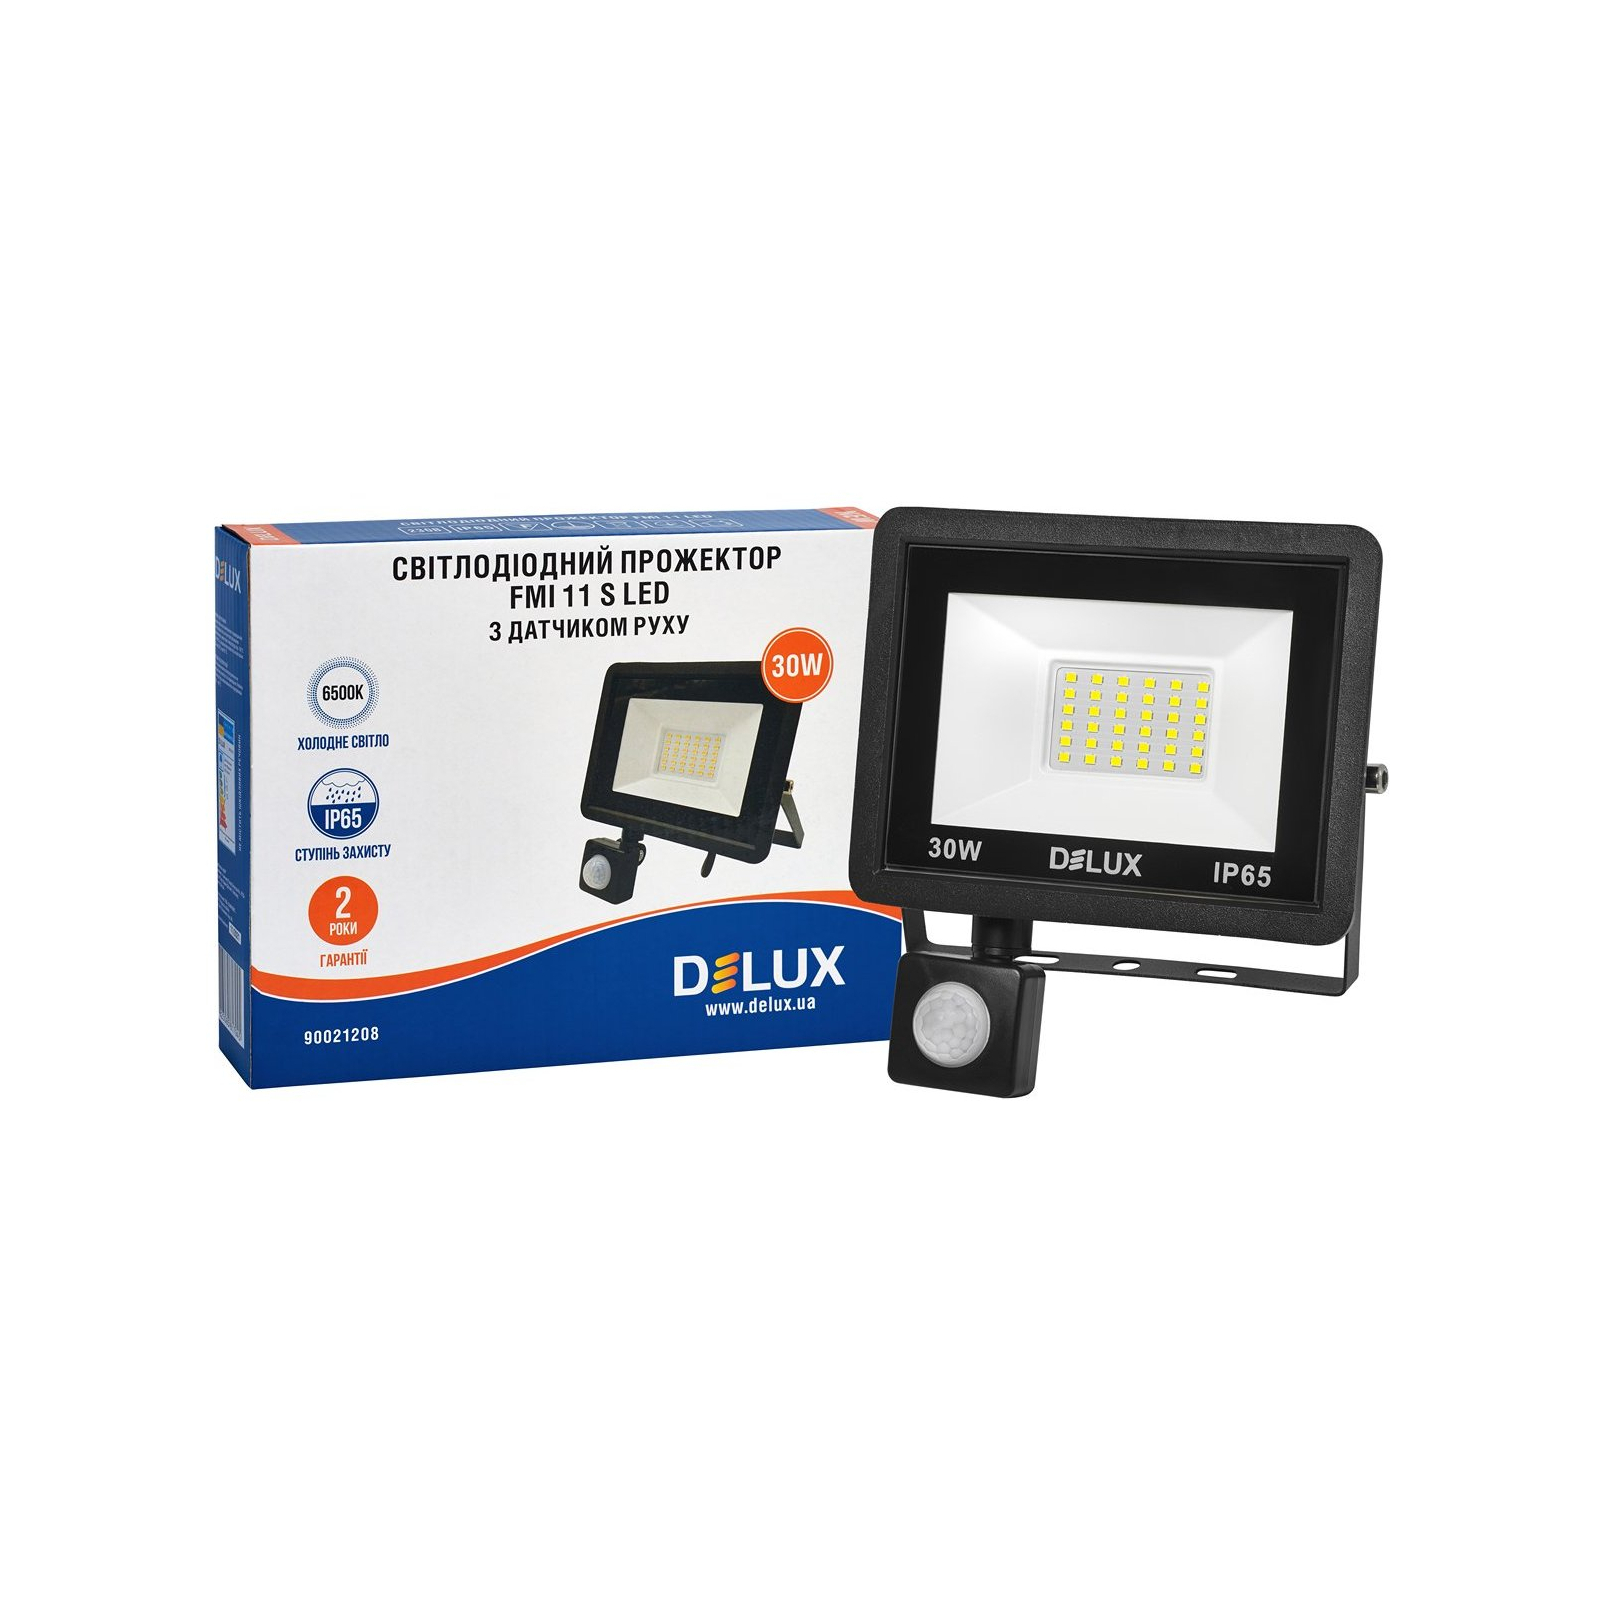 Прожектор Delux FMI 11 S LED 30Вт 6500K_IP65 (90021208) изображение 4